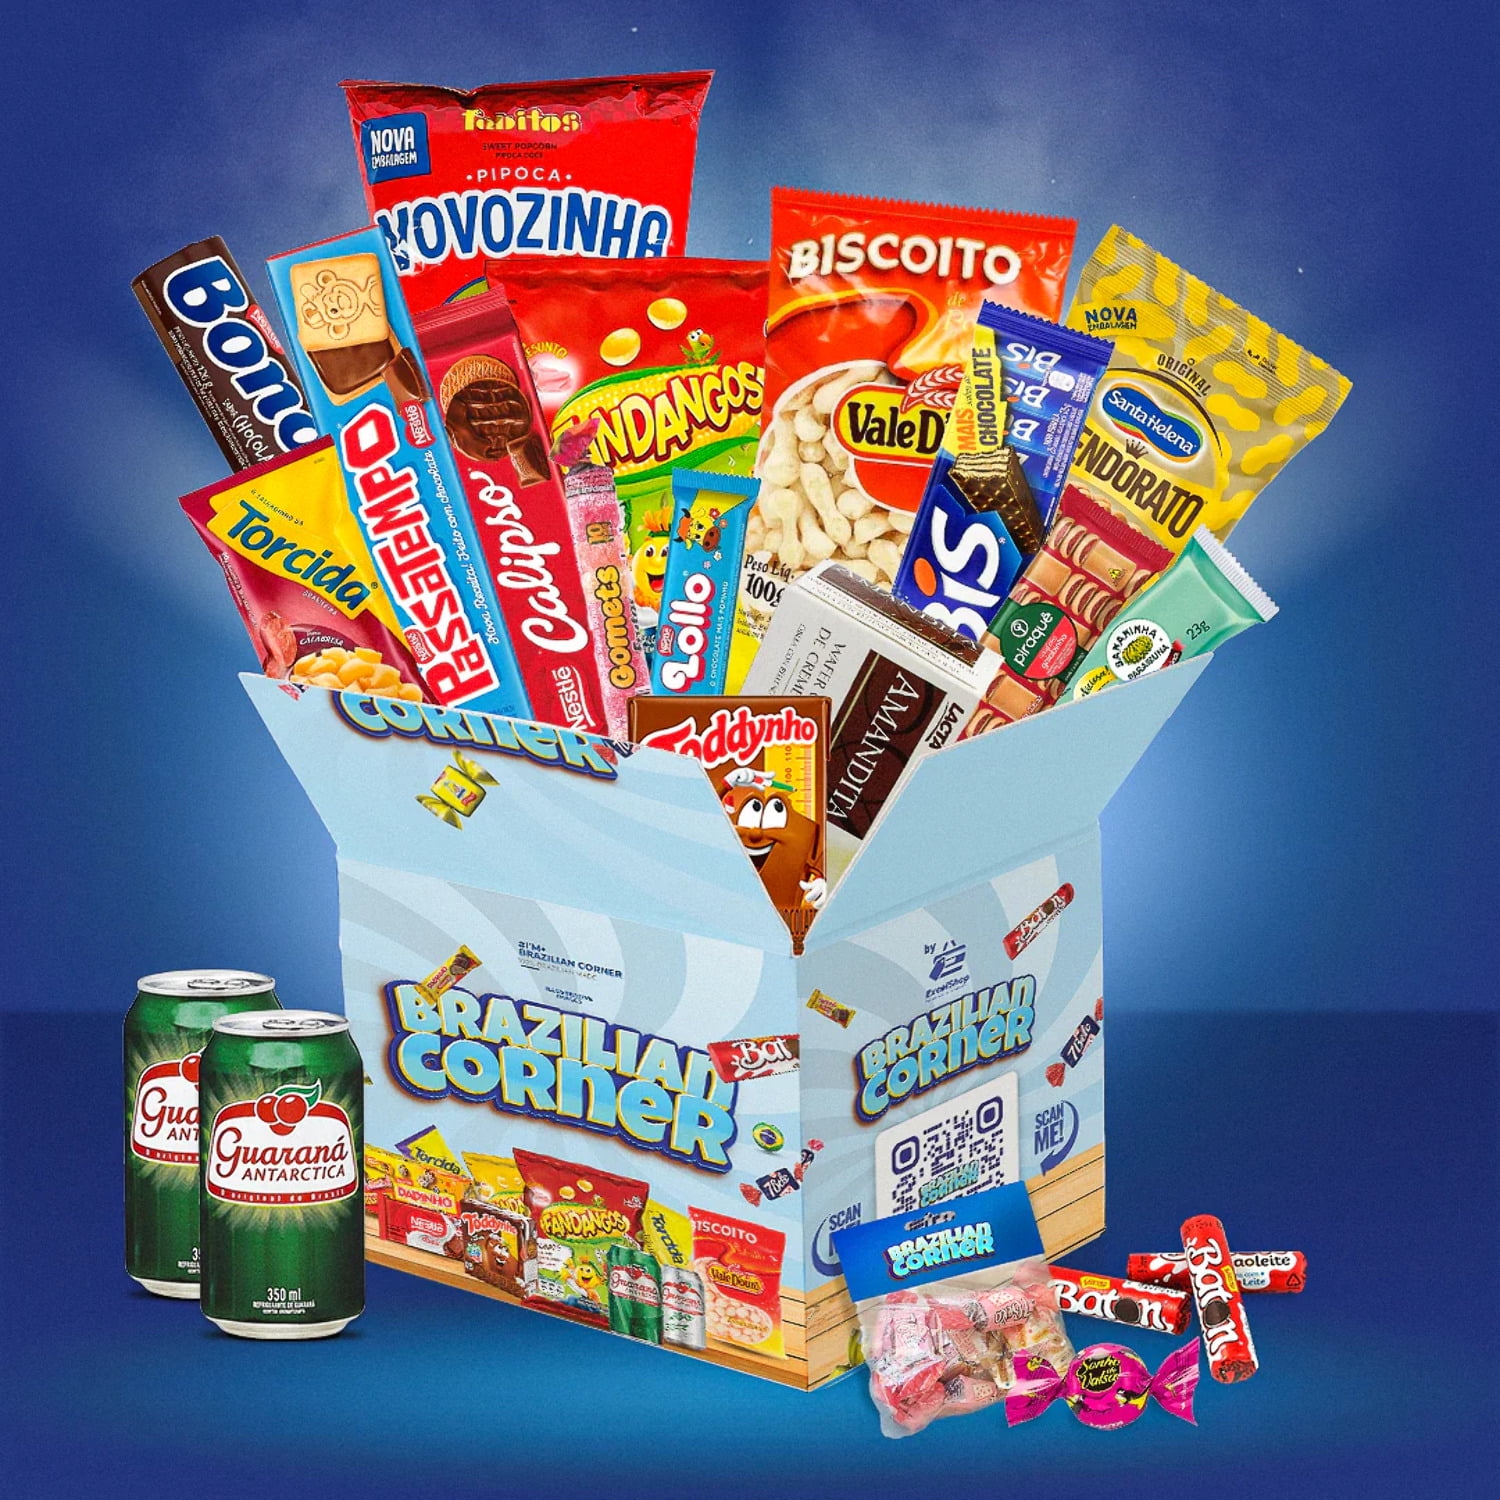 Brazilian Corner Box Variety Pack, Mixed Snacks, Cookies, Candies,  Chocolates & Drinks, Brazilian Treats for Adults, Kids & Teen